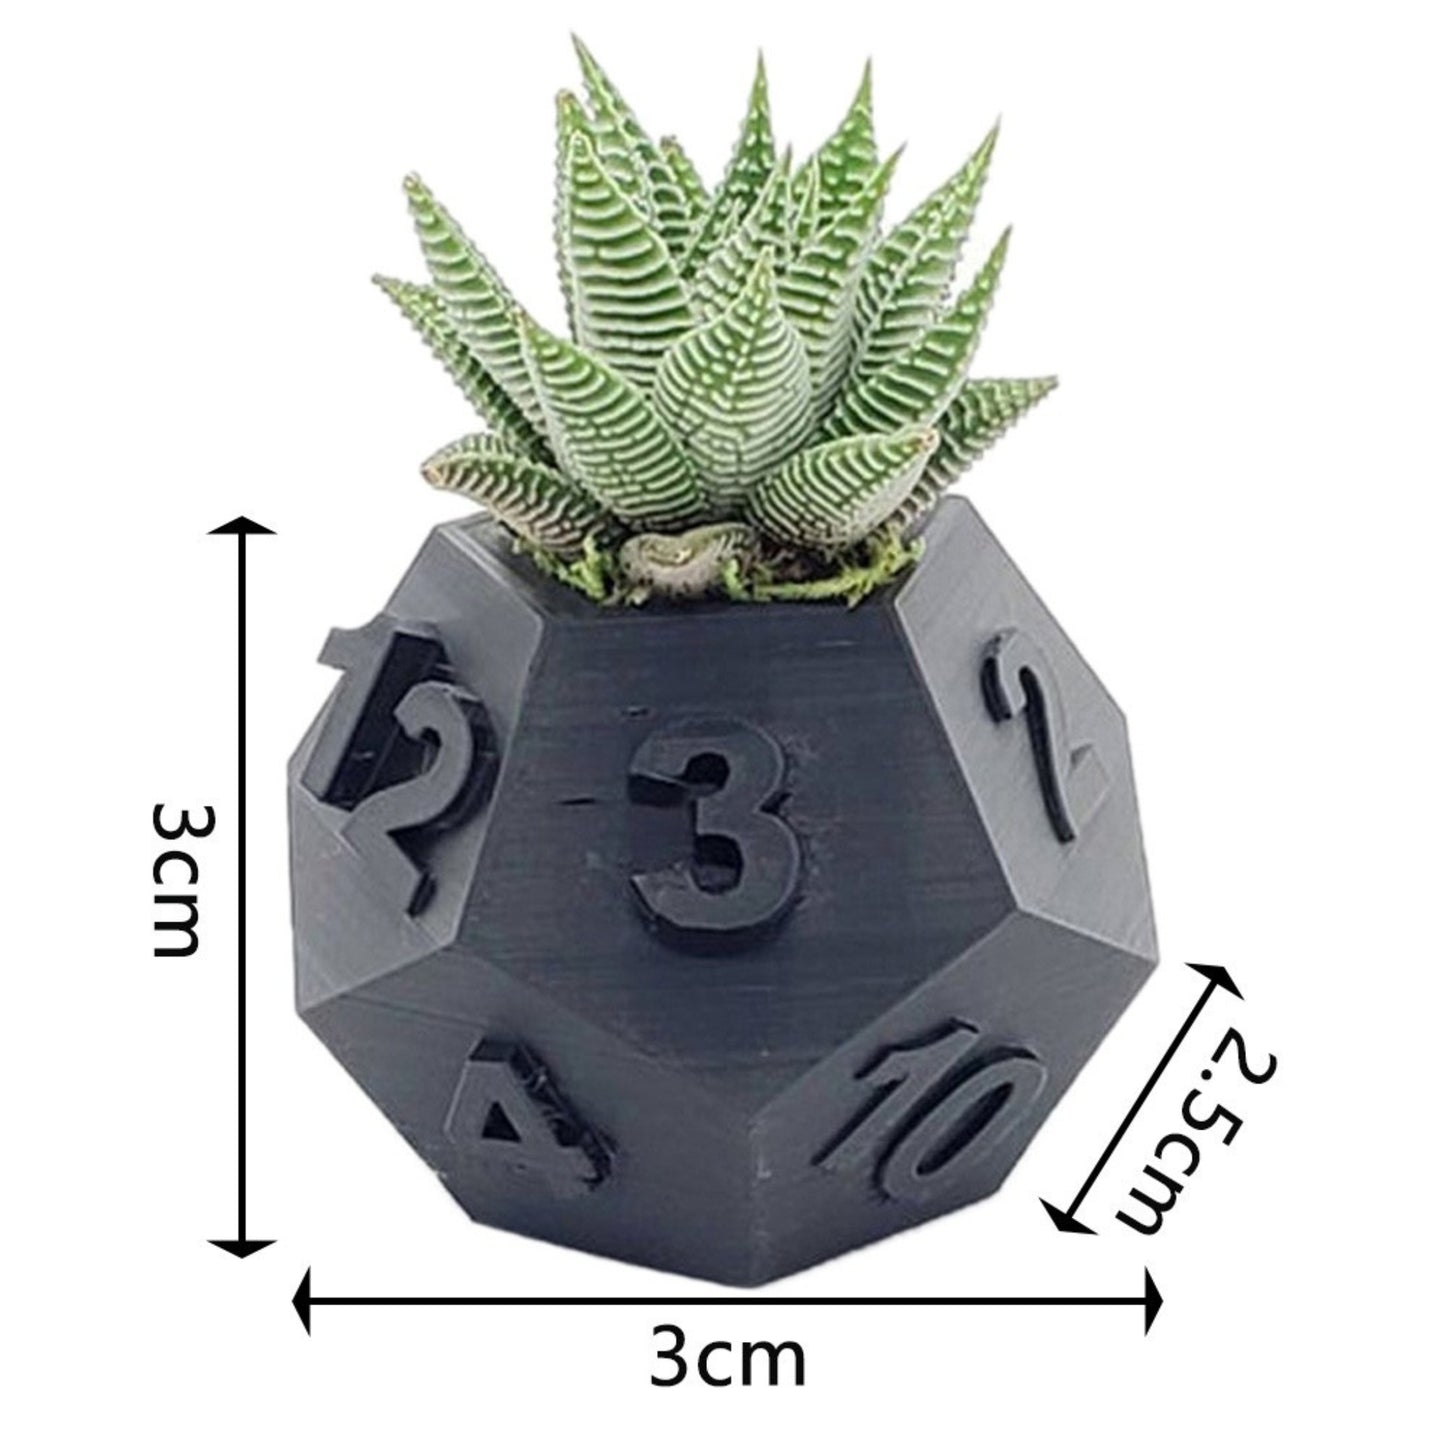 3D Printed Tabletop RPG Dice Succulent Planter Pot